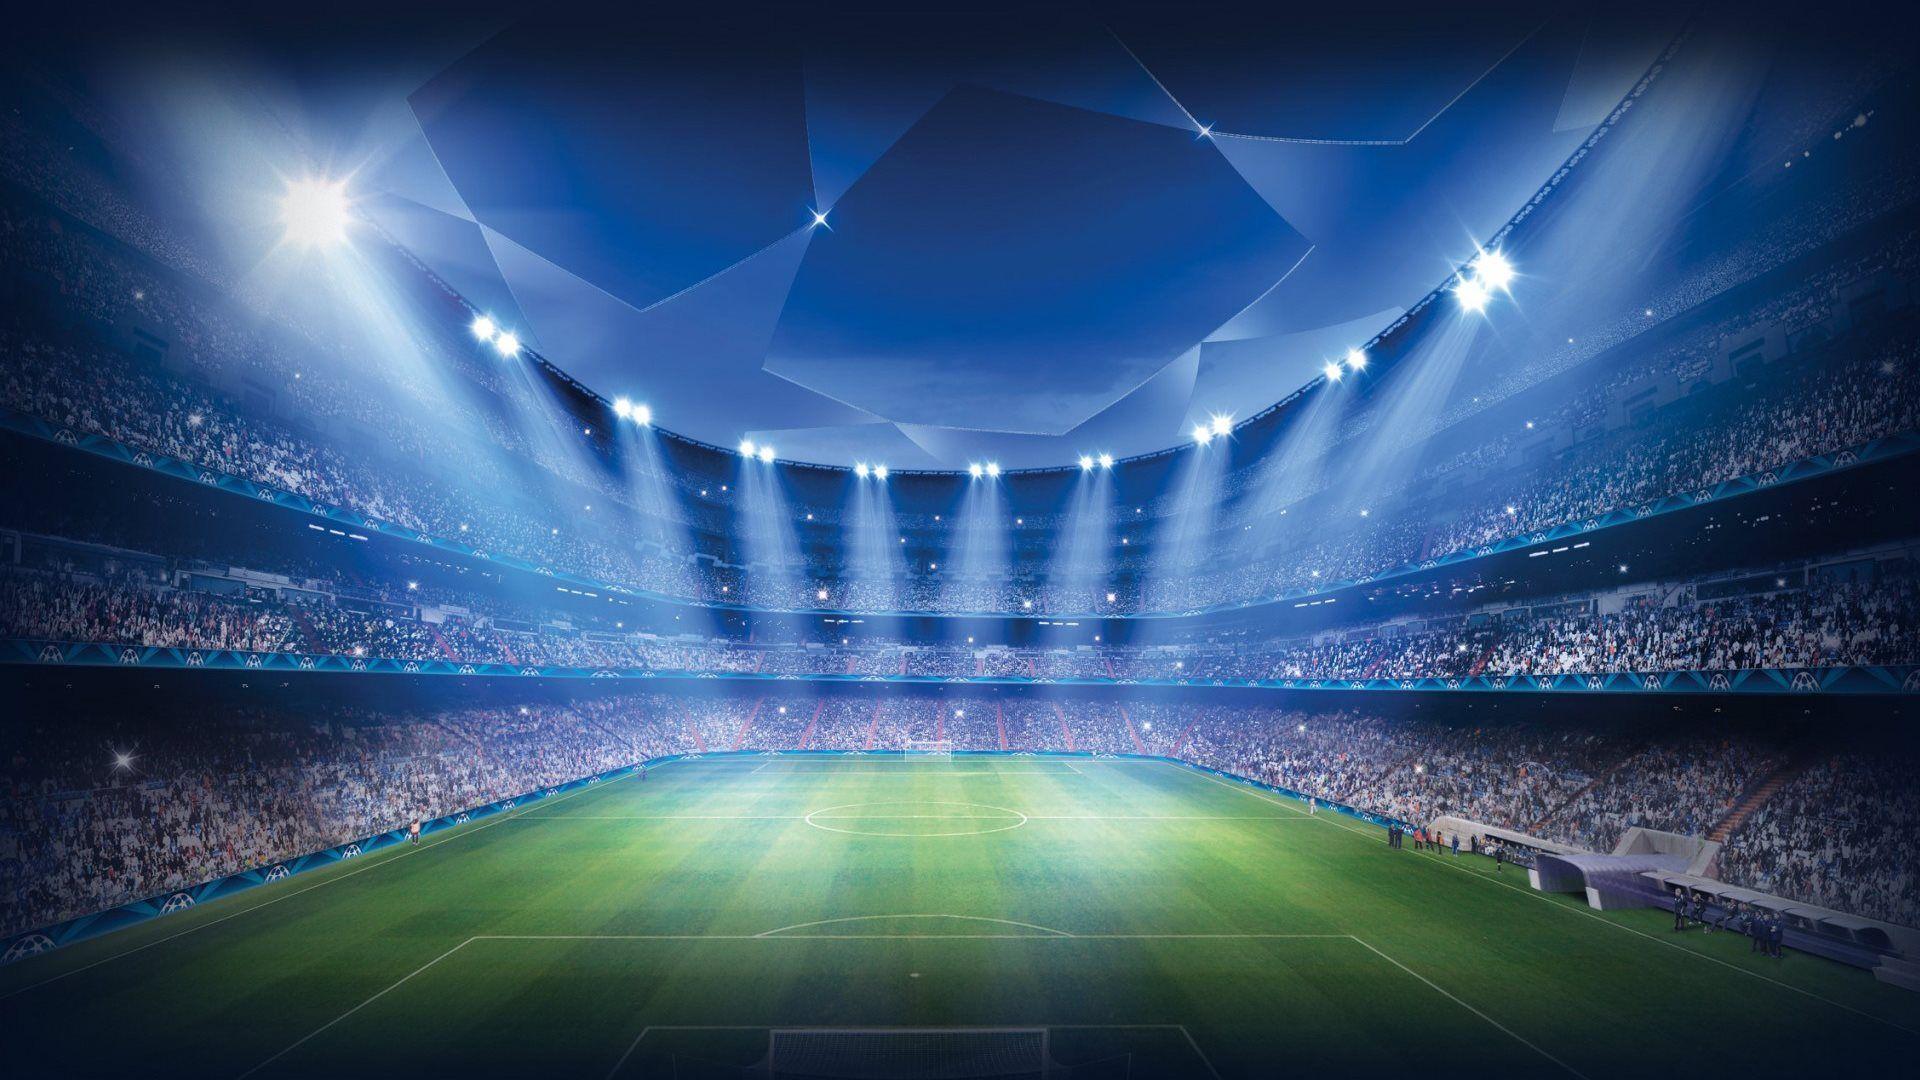 HD Football Wallpaper Find best latest HD Football